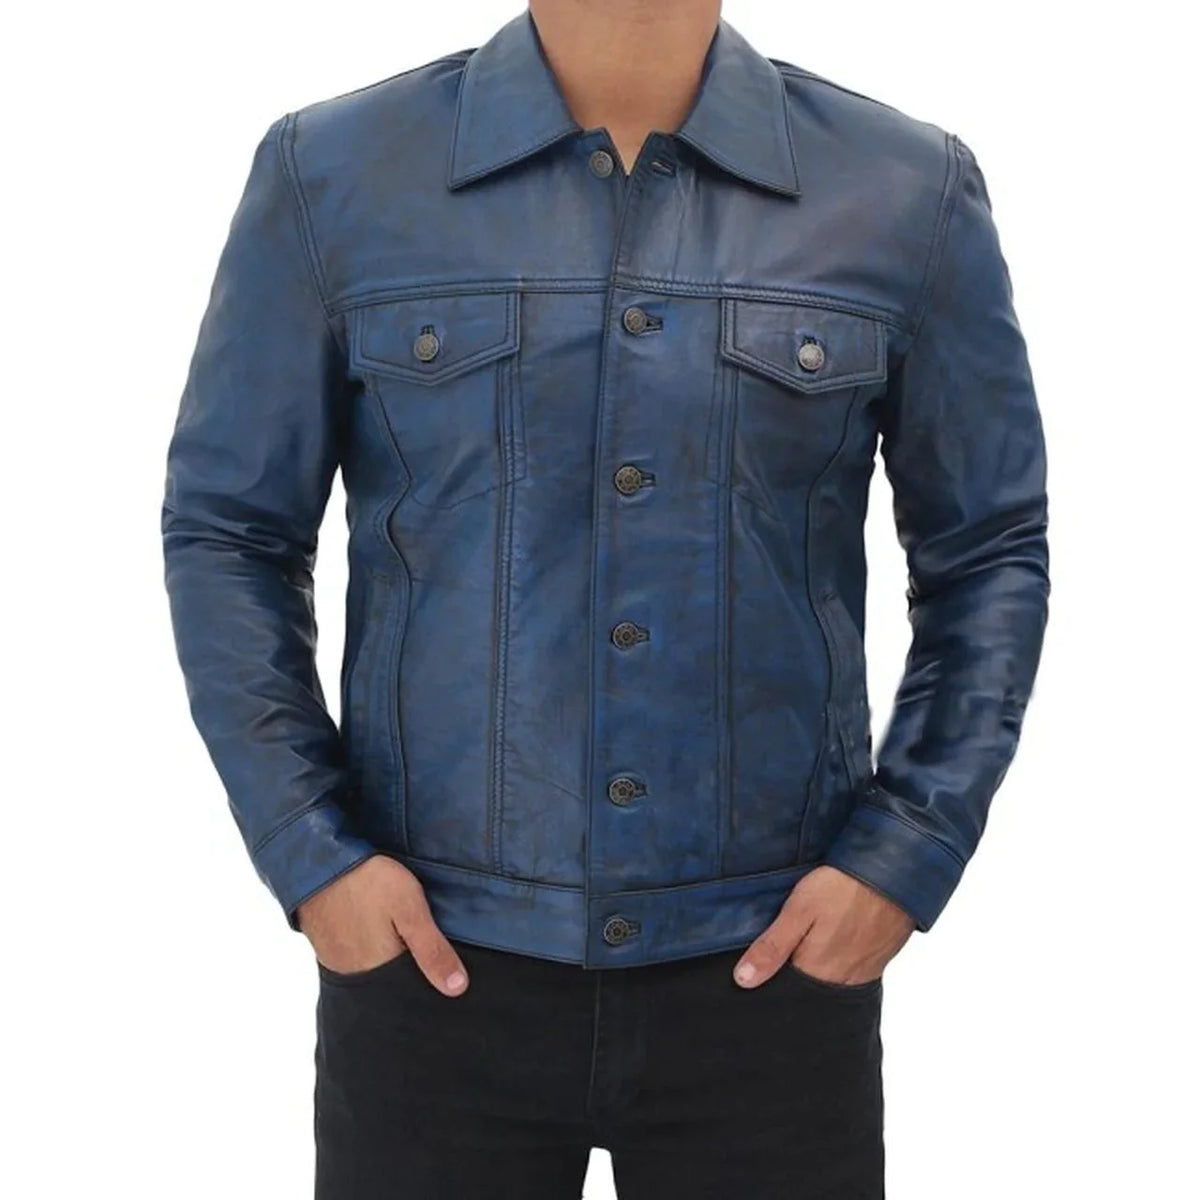 Men's Blue Trucker Distressed Leather Jacket